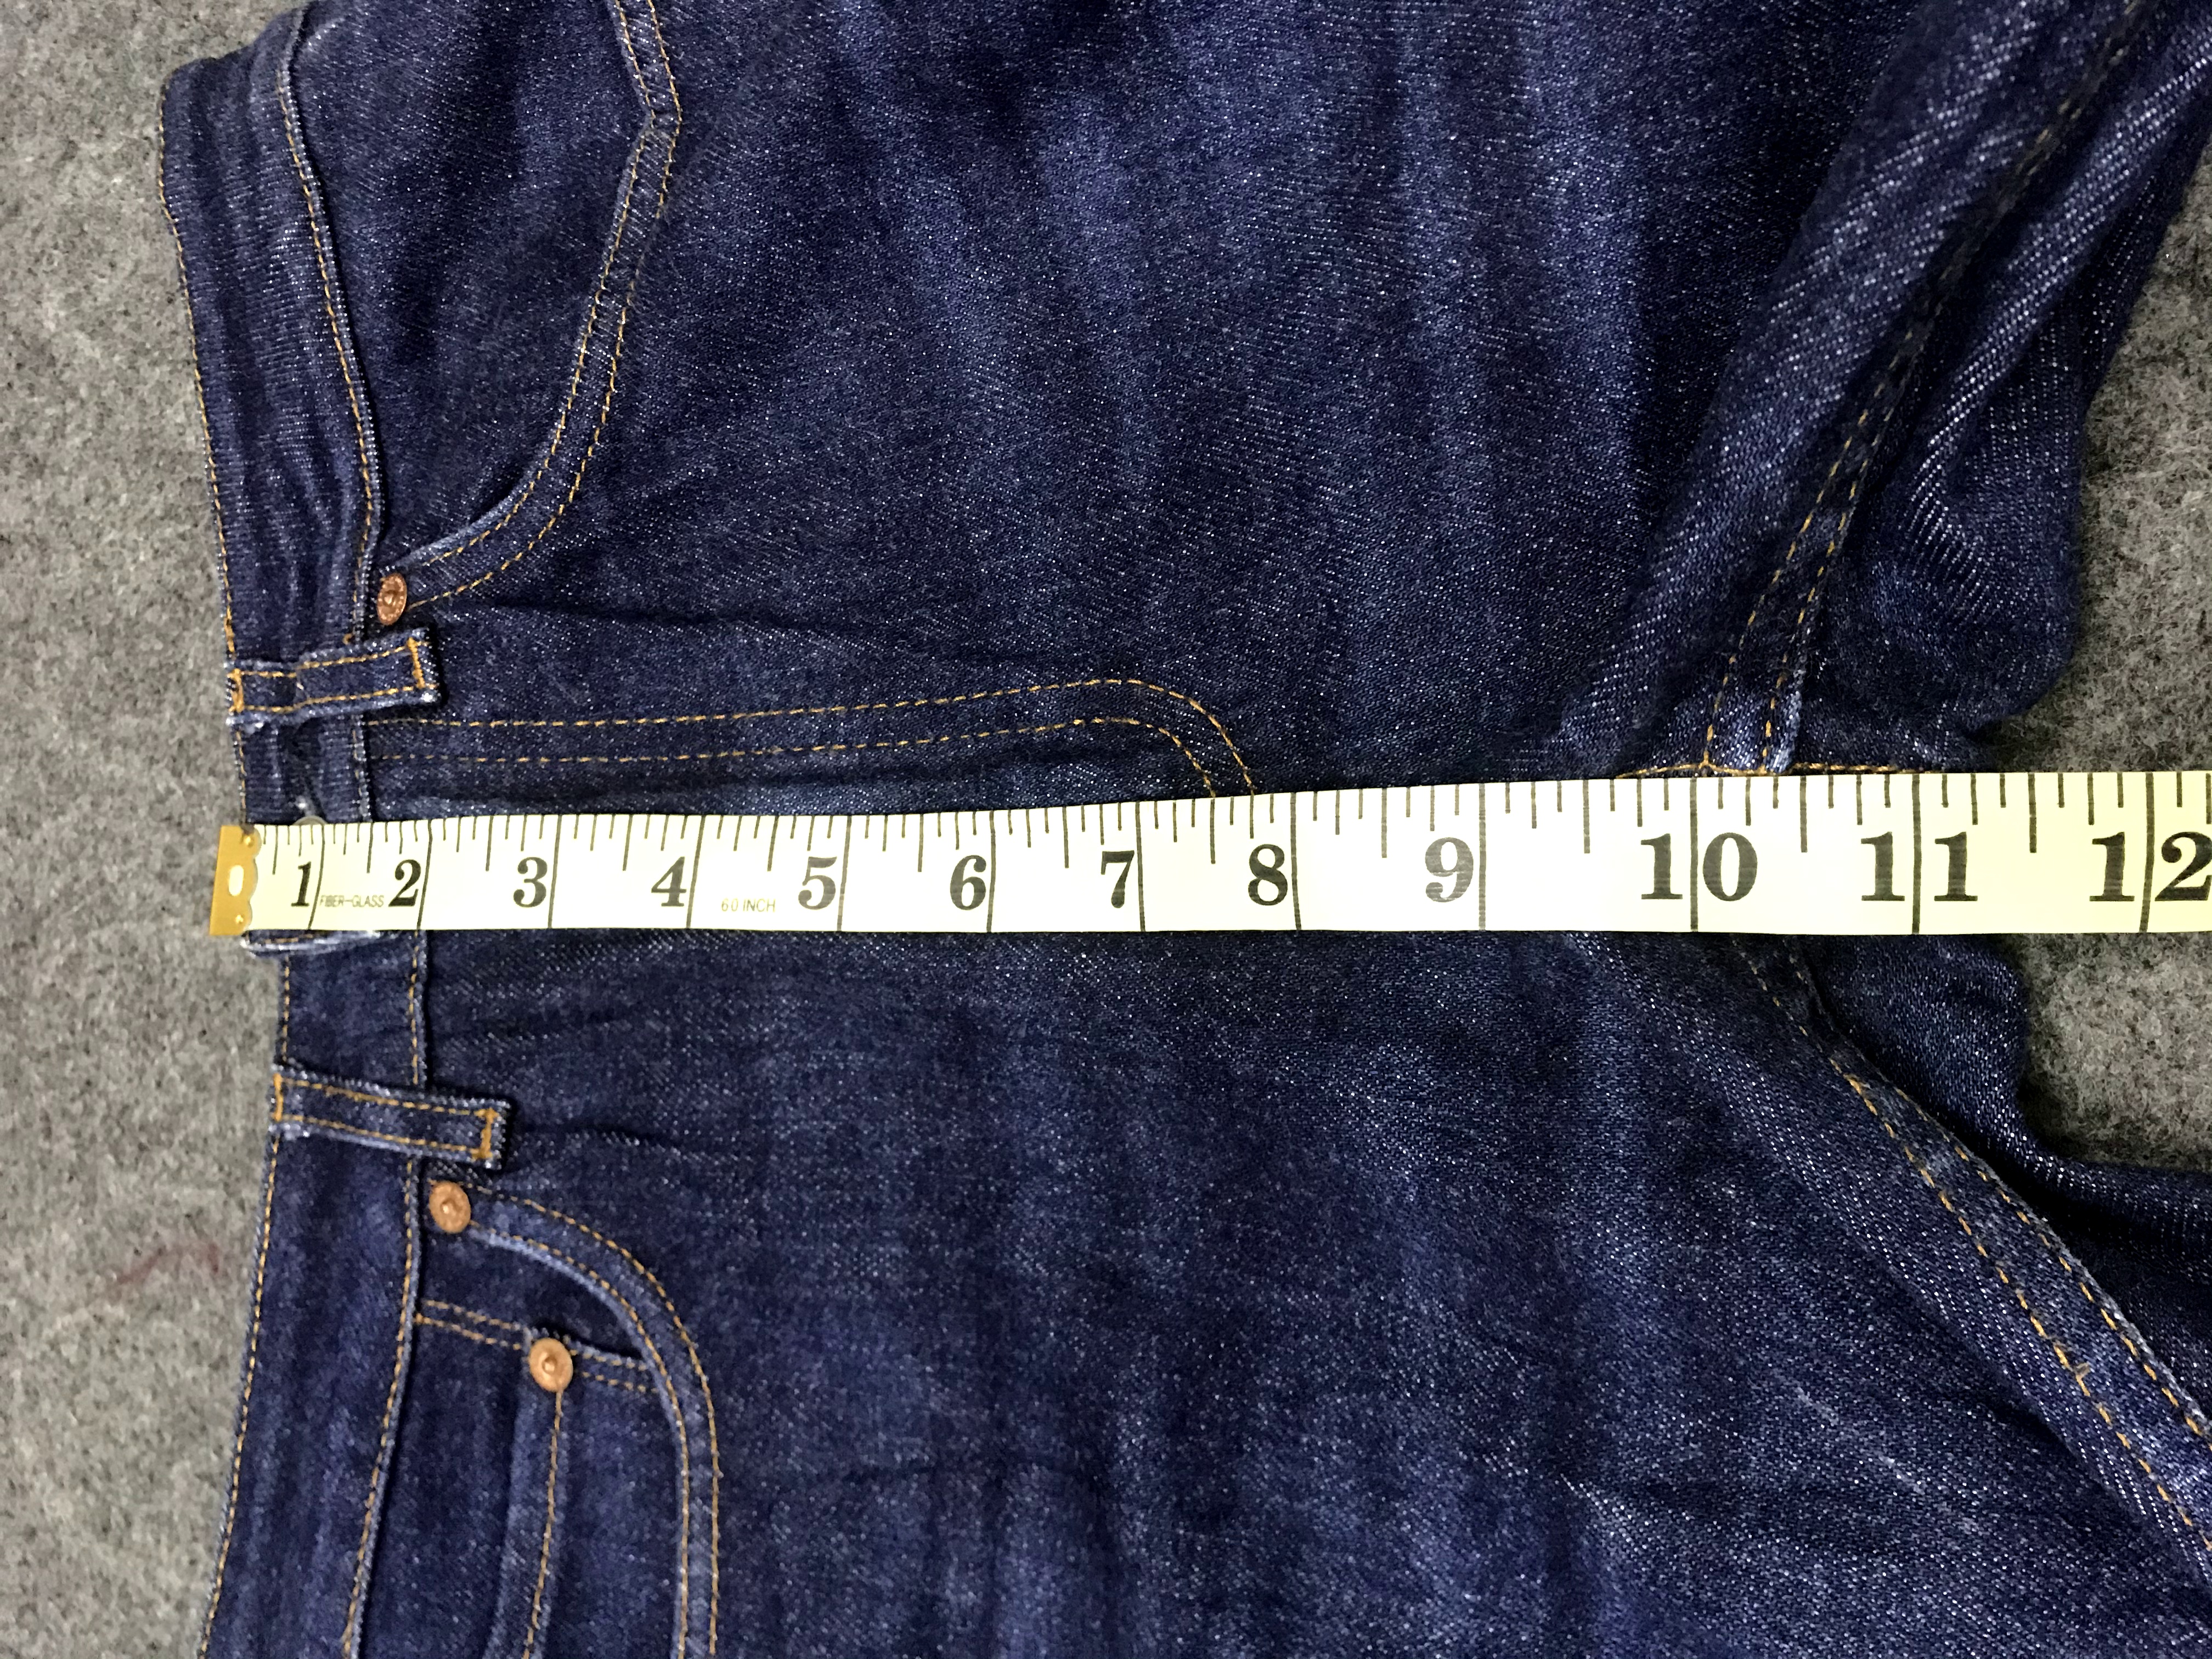 Acne Studios Italian Designer Denim Jeans Trouser Pant - 13